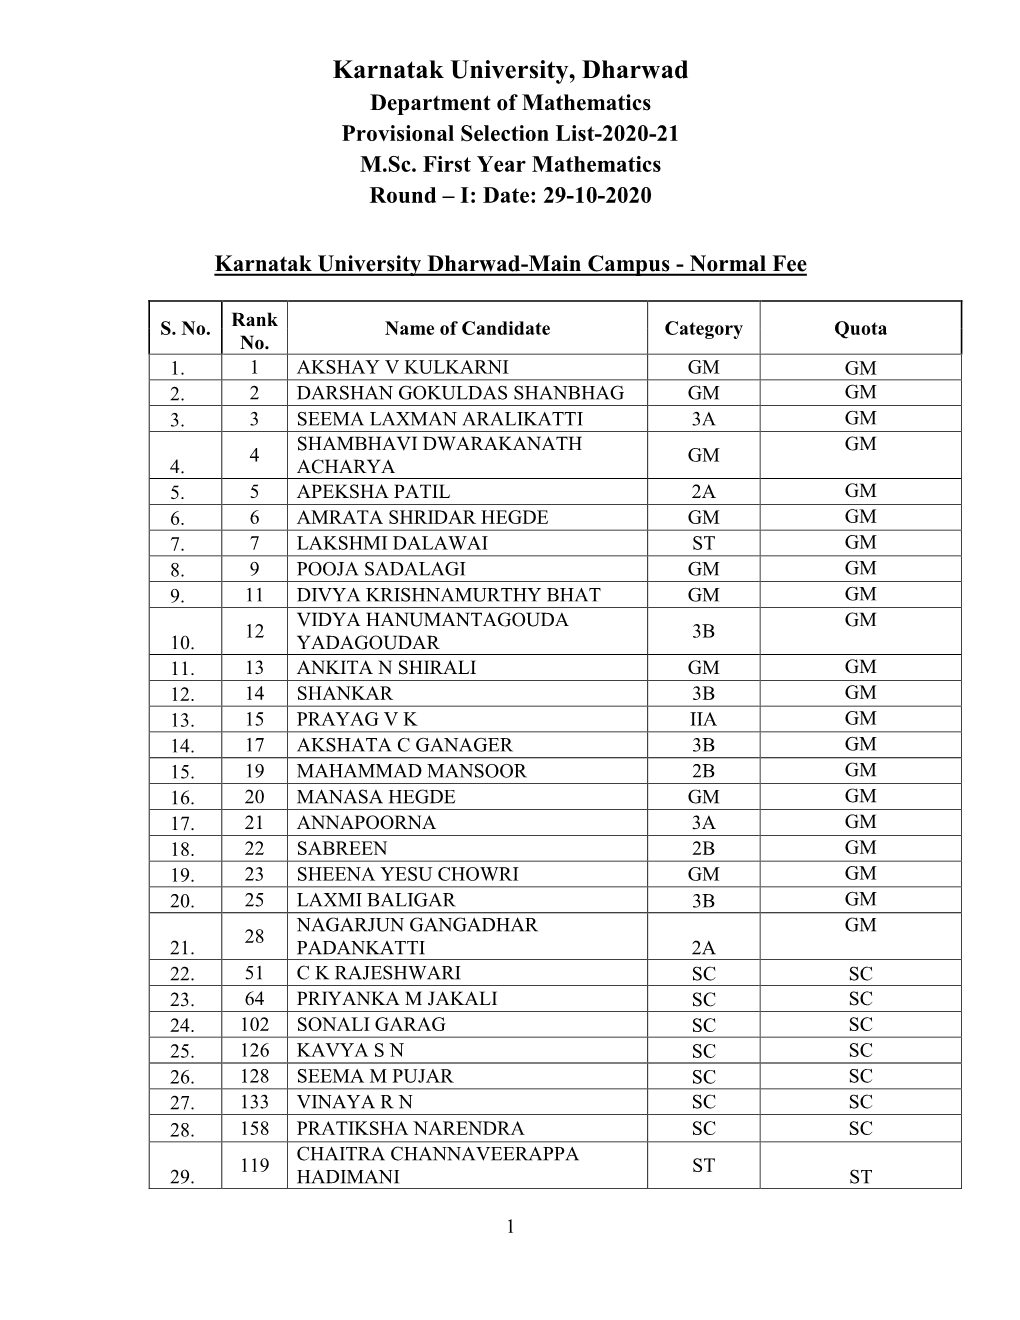 Karnatak University, Dharwad Department of Mathematics Provisional Selection List-2020-21 M.Sc